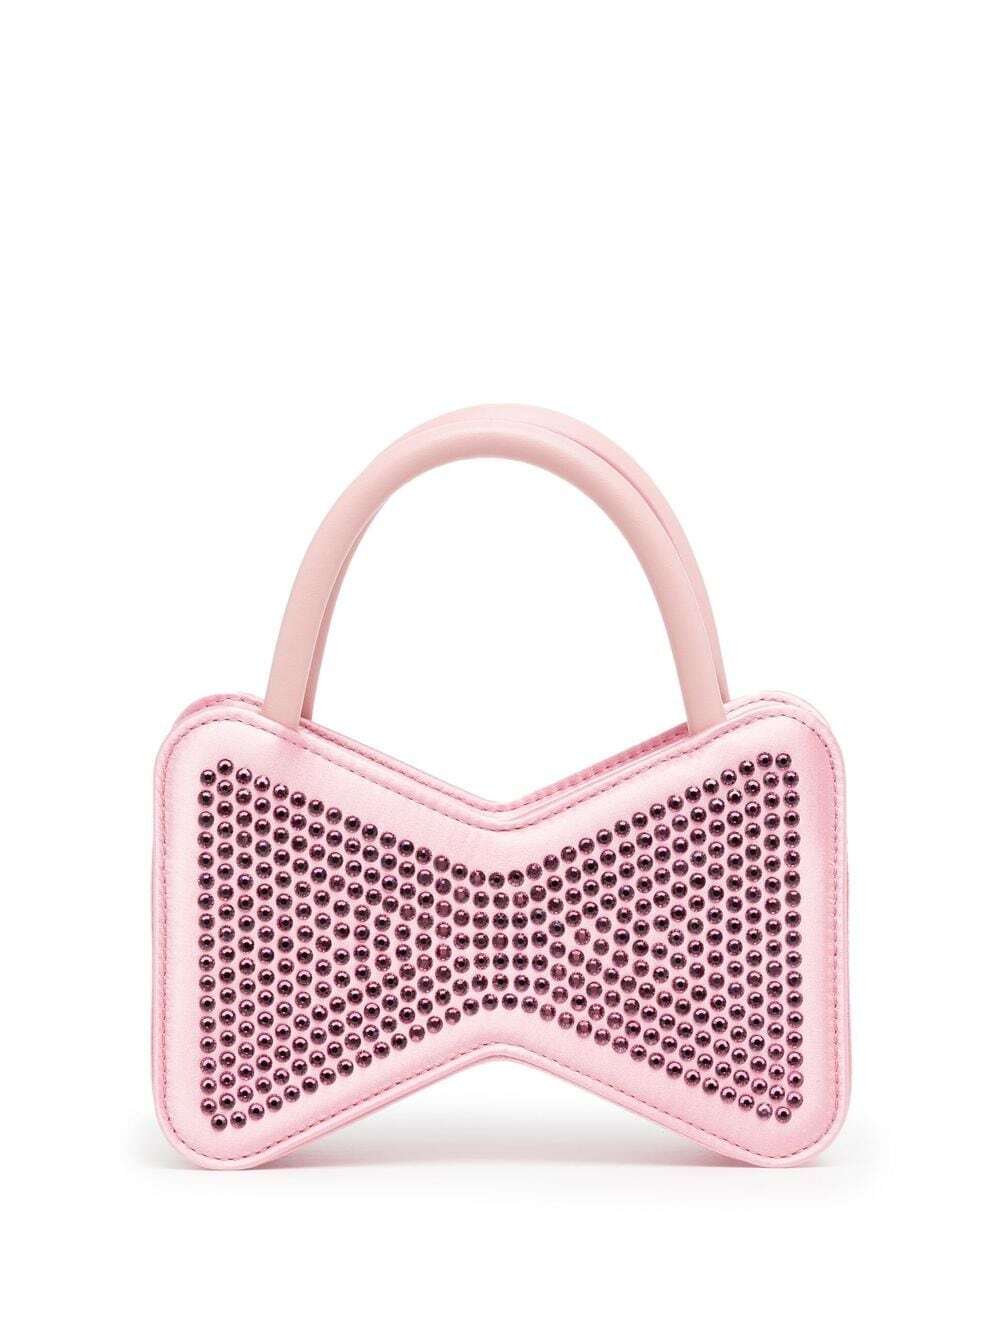 MACH & MACH crystal-embellished mini bag - Pink